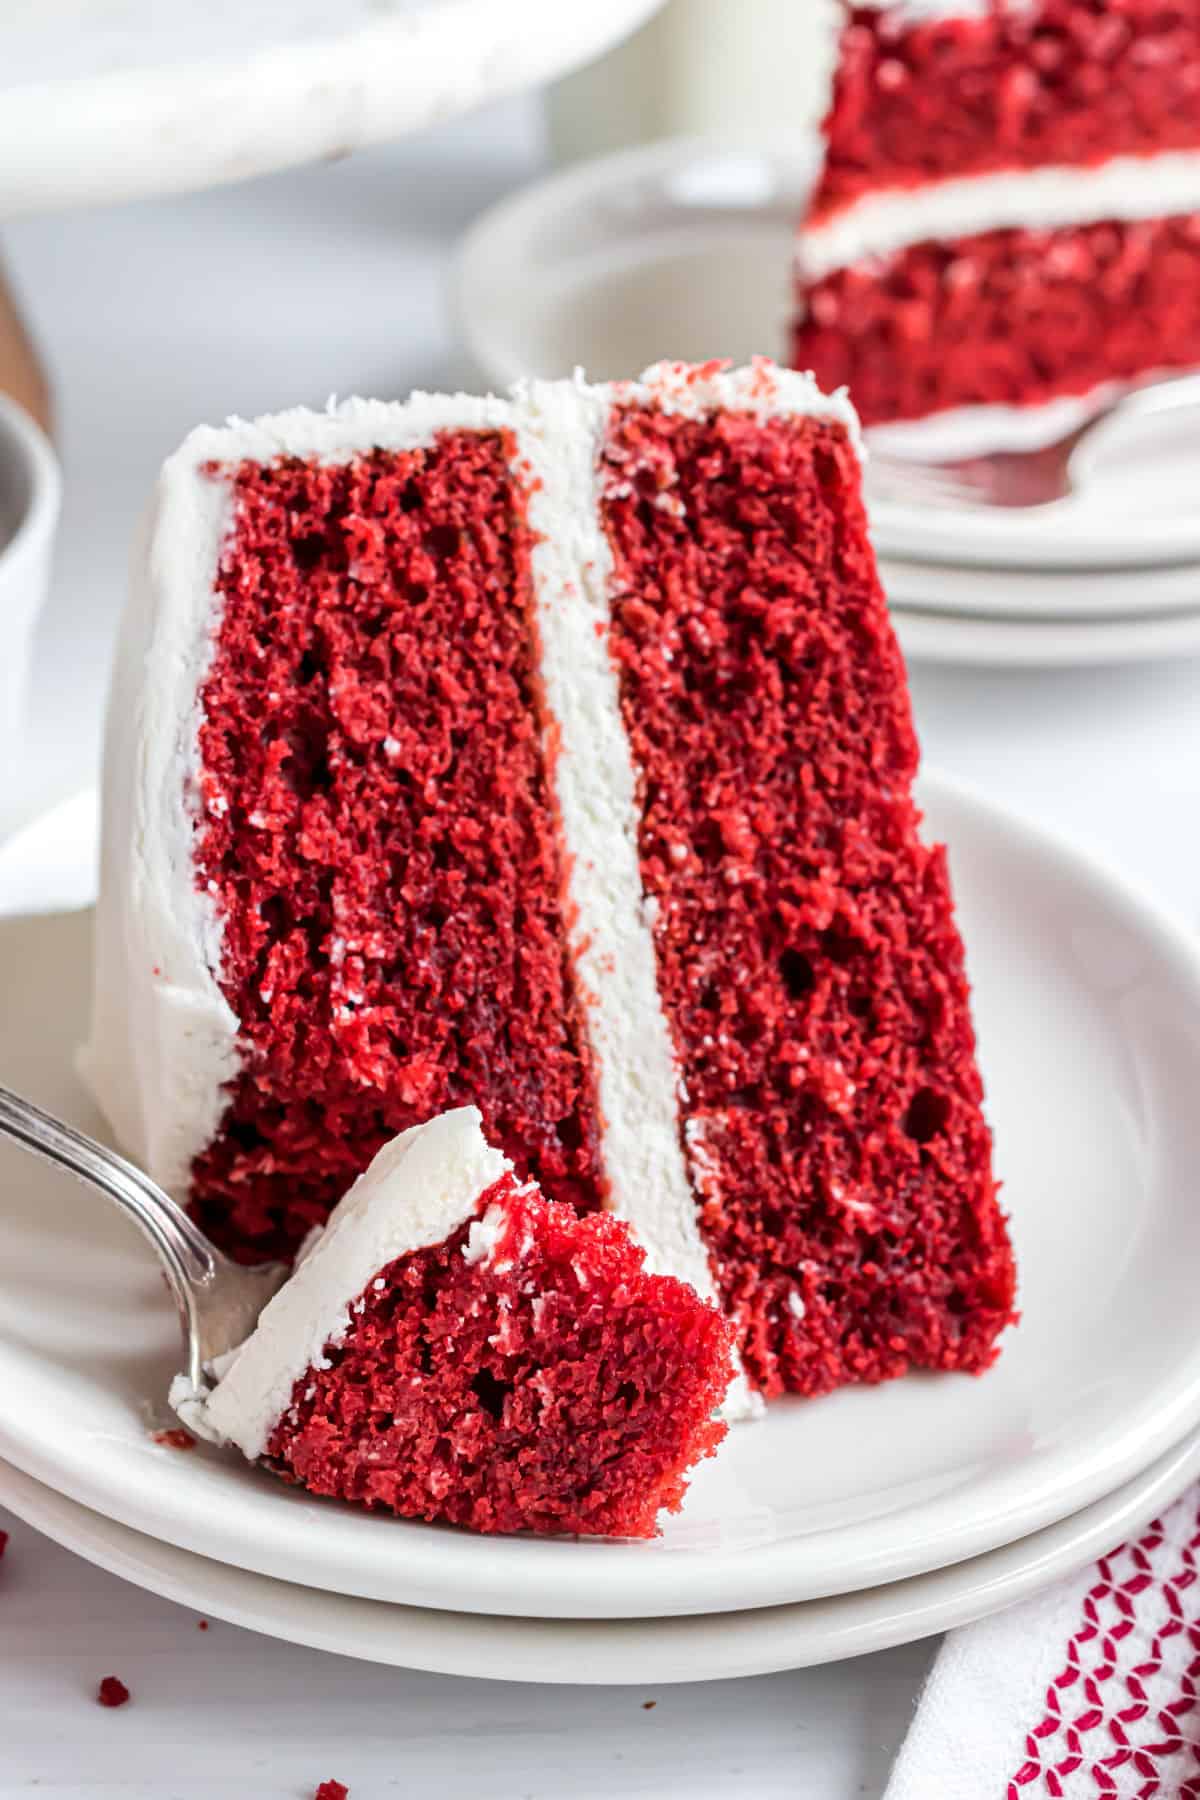 Slice of red velvet cake on a white plate with a bite taken.